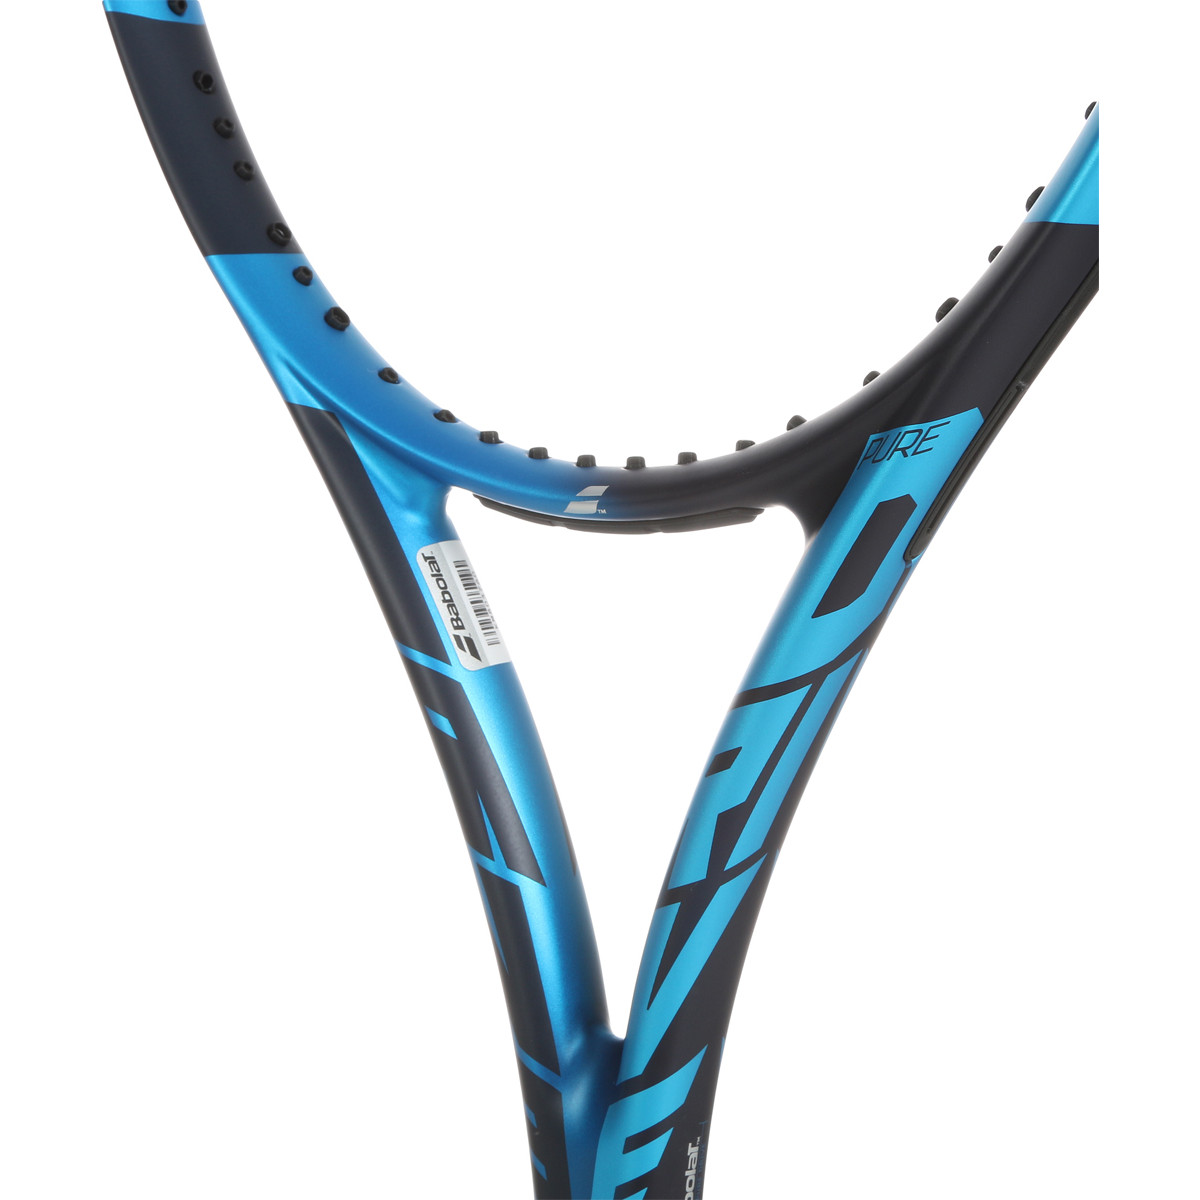 Raquette de Tennis Racket Babolat Pure Drive 300 G l3 